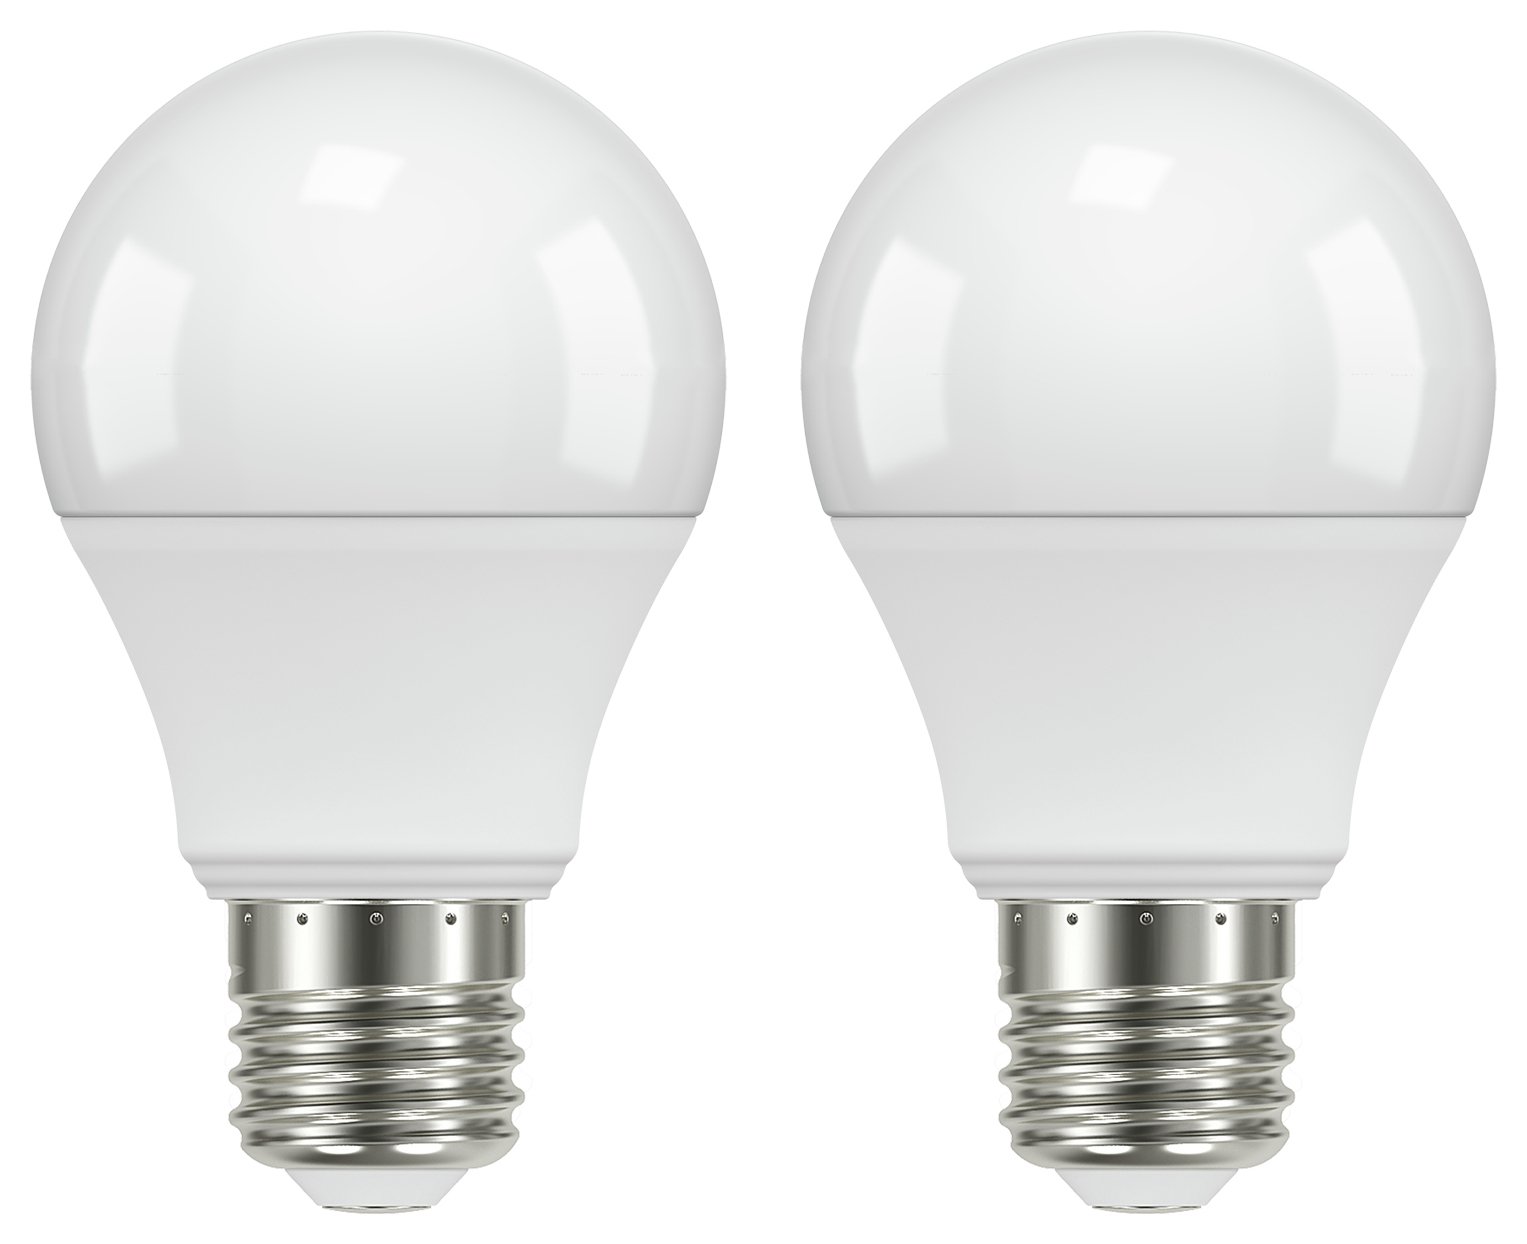 Argos Home 7.2W LED Classic ES Light Bulb - 2 Pack